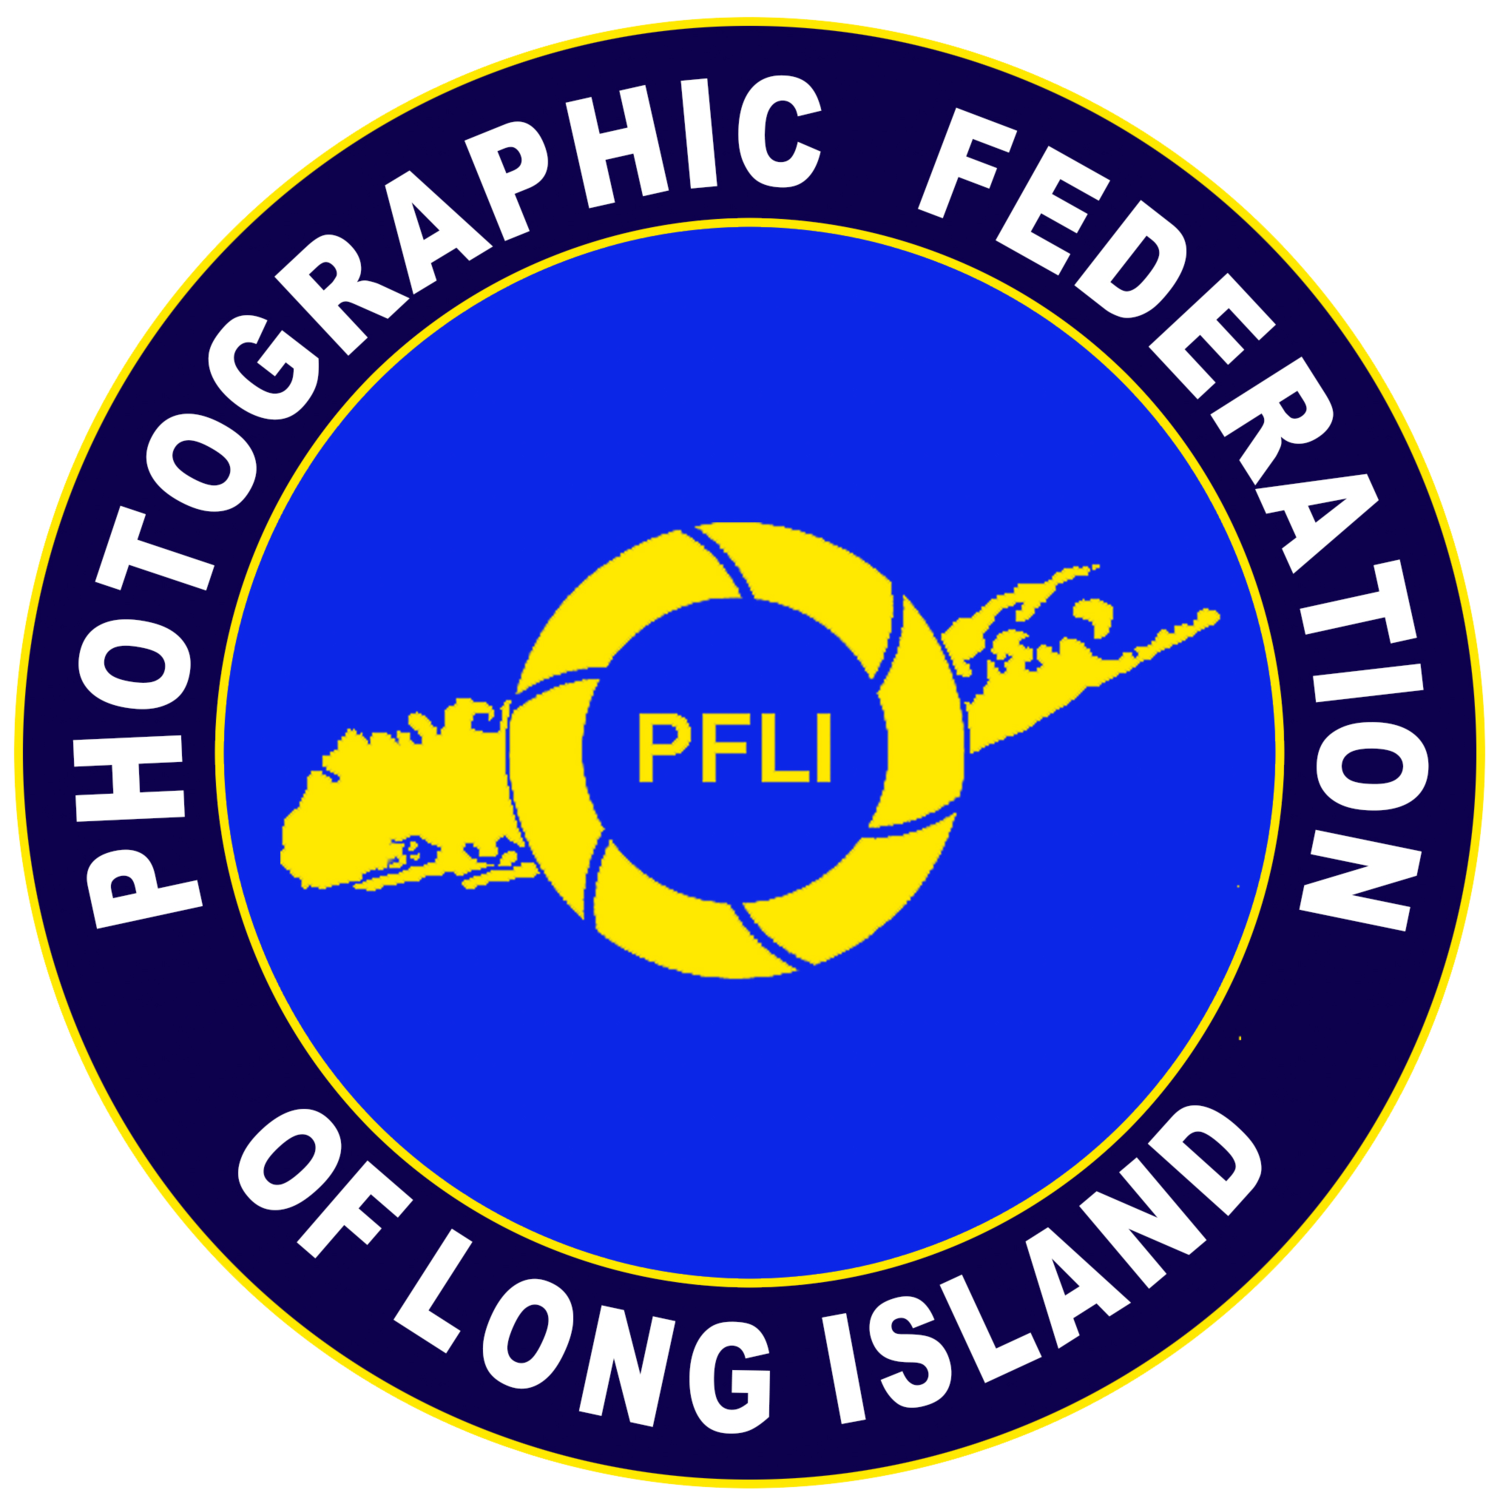 Photographic Federation of Long Island